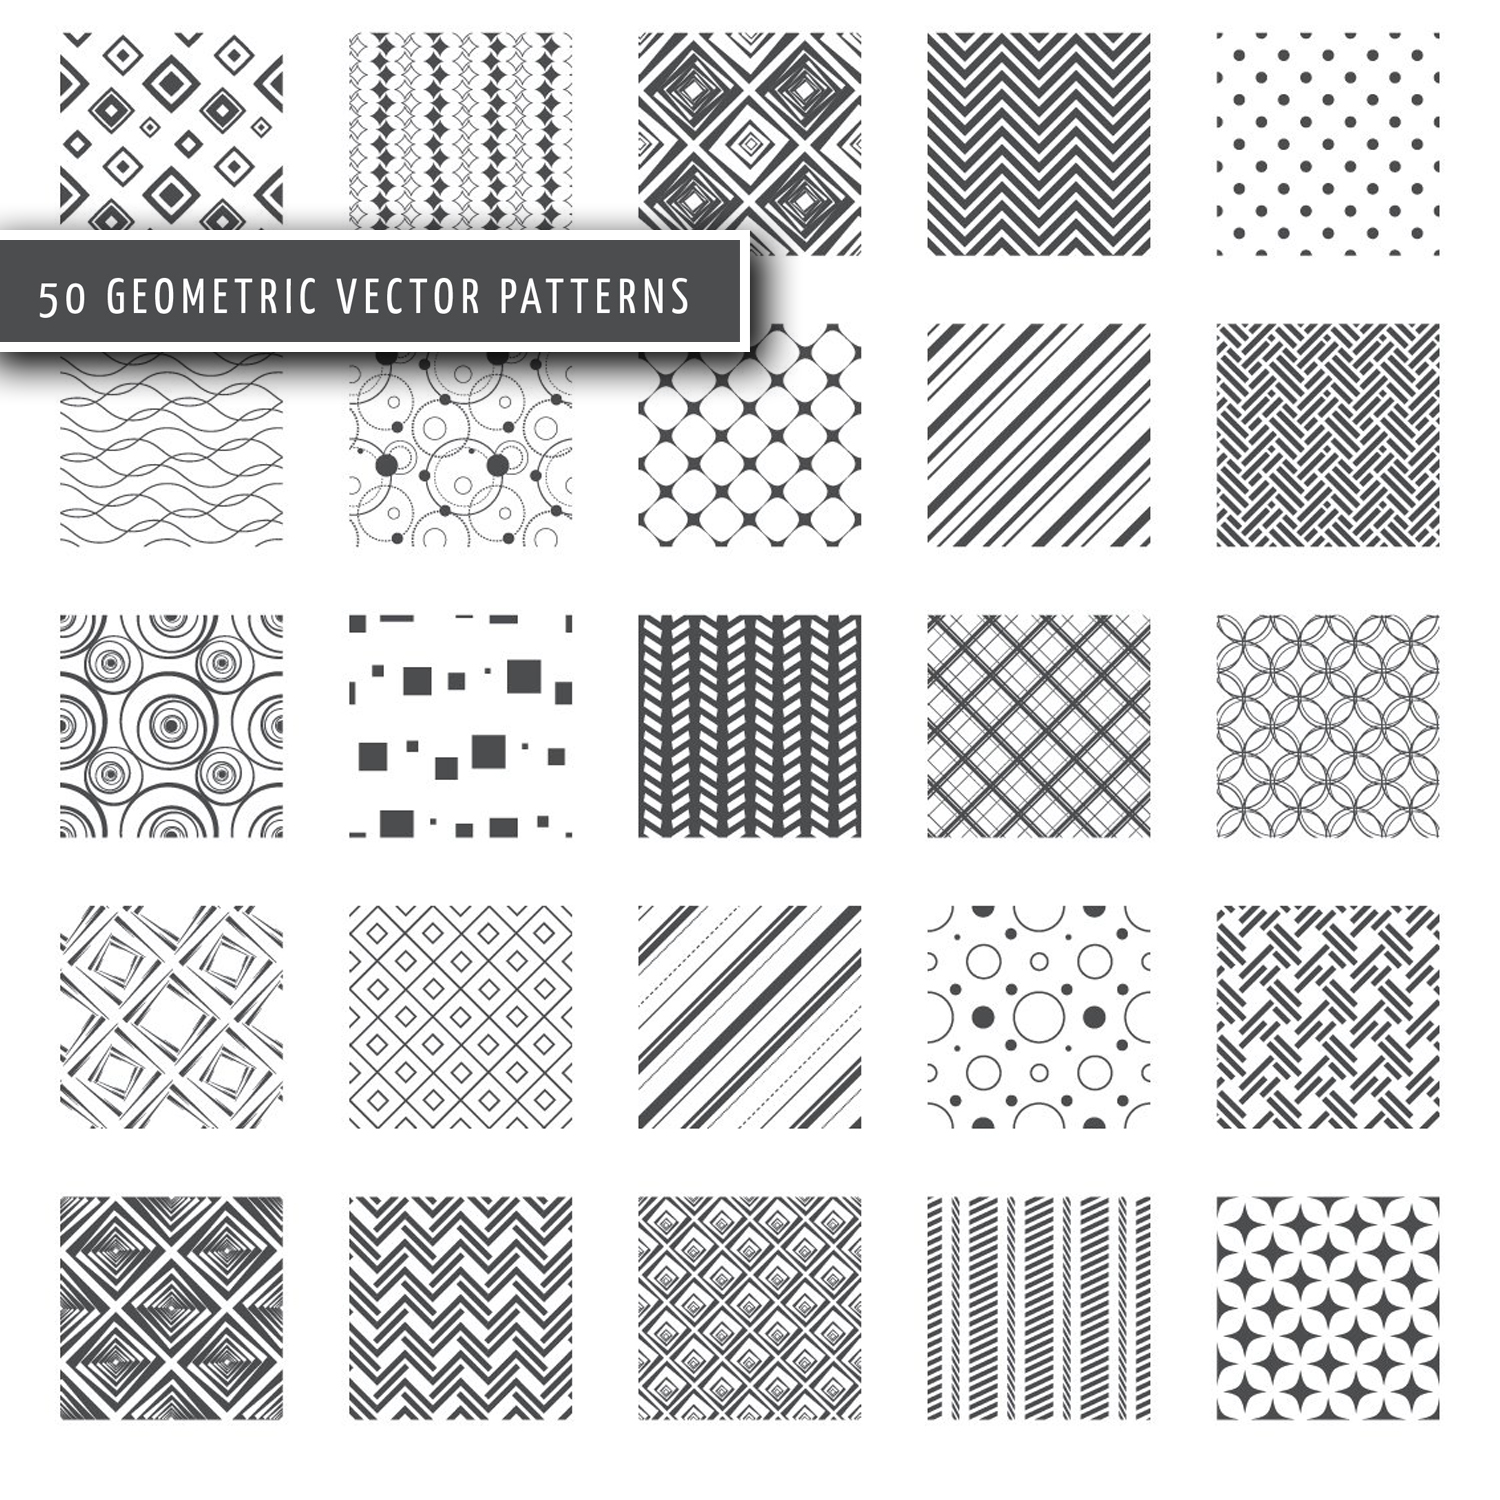 geometric patterns